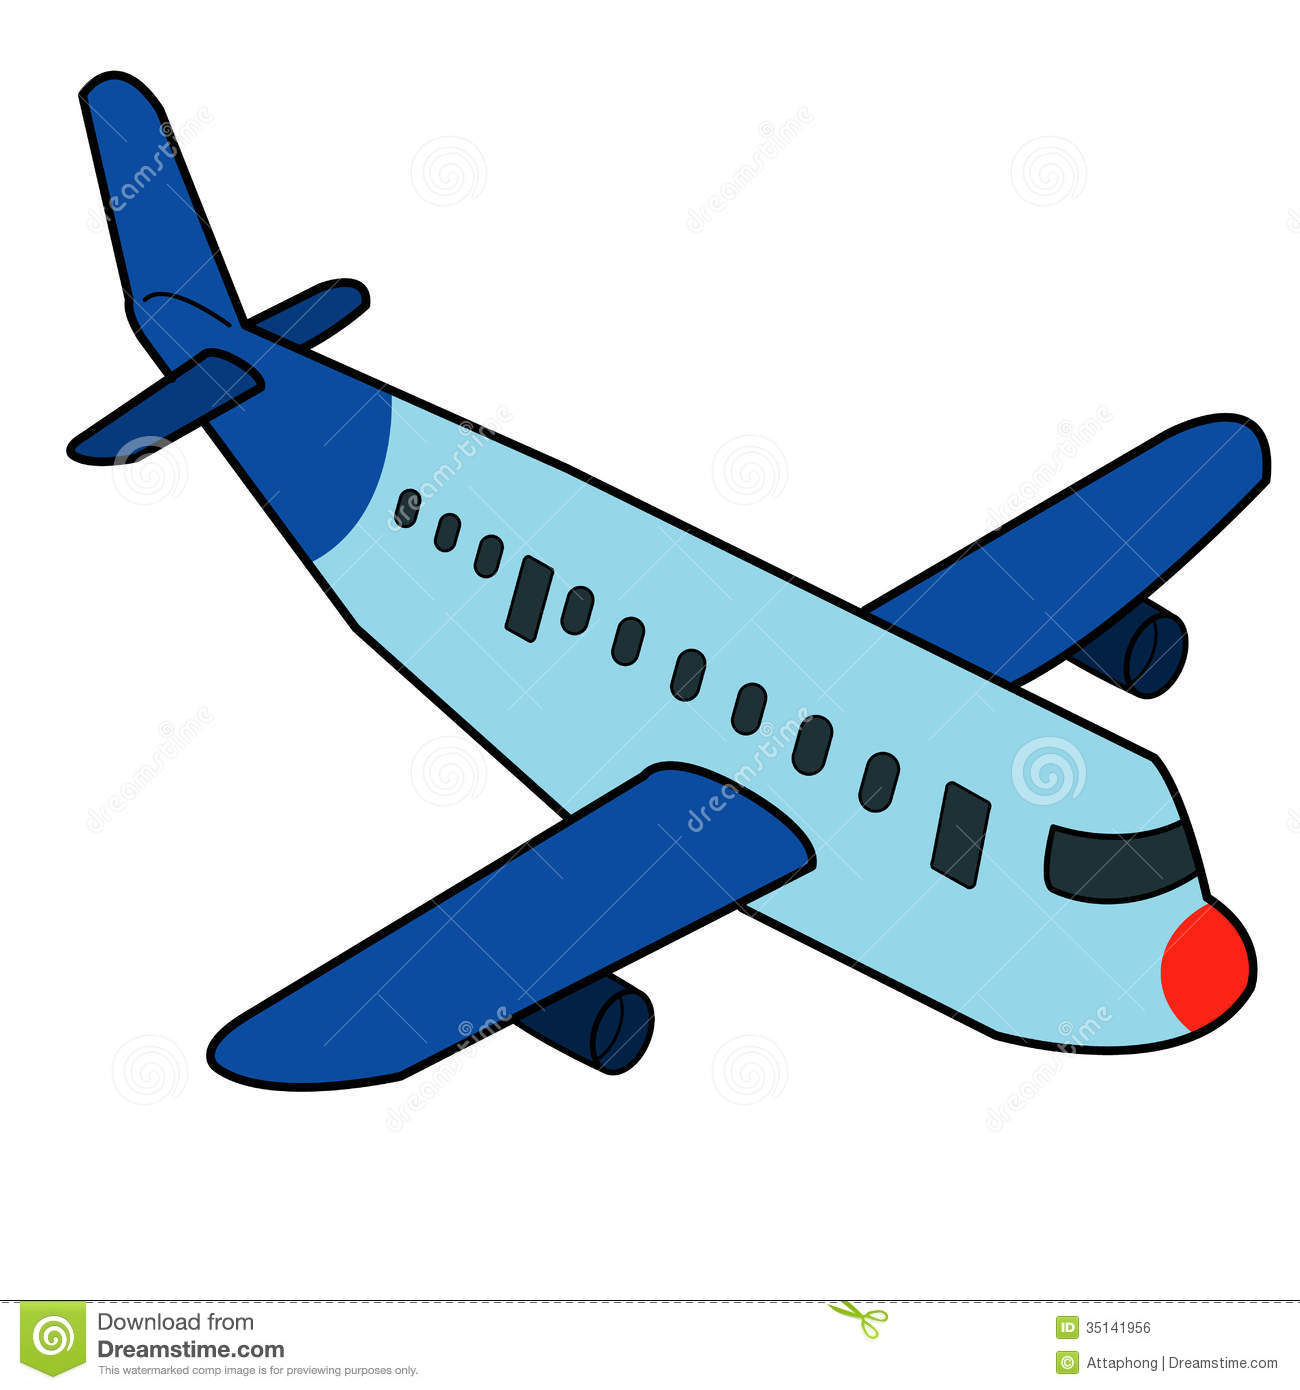 Airplane Cartoon Vector Royalty Free Stock Image   Image  35141956